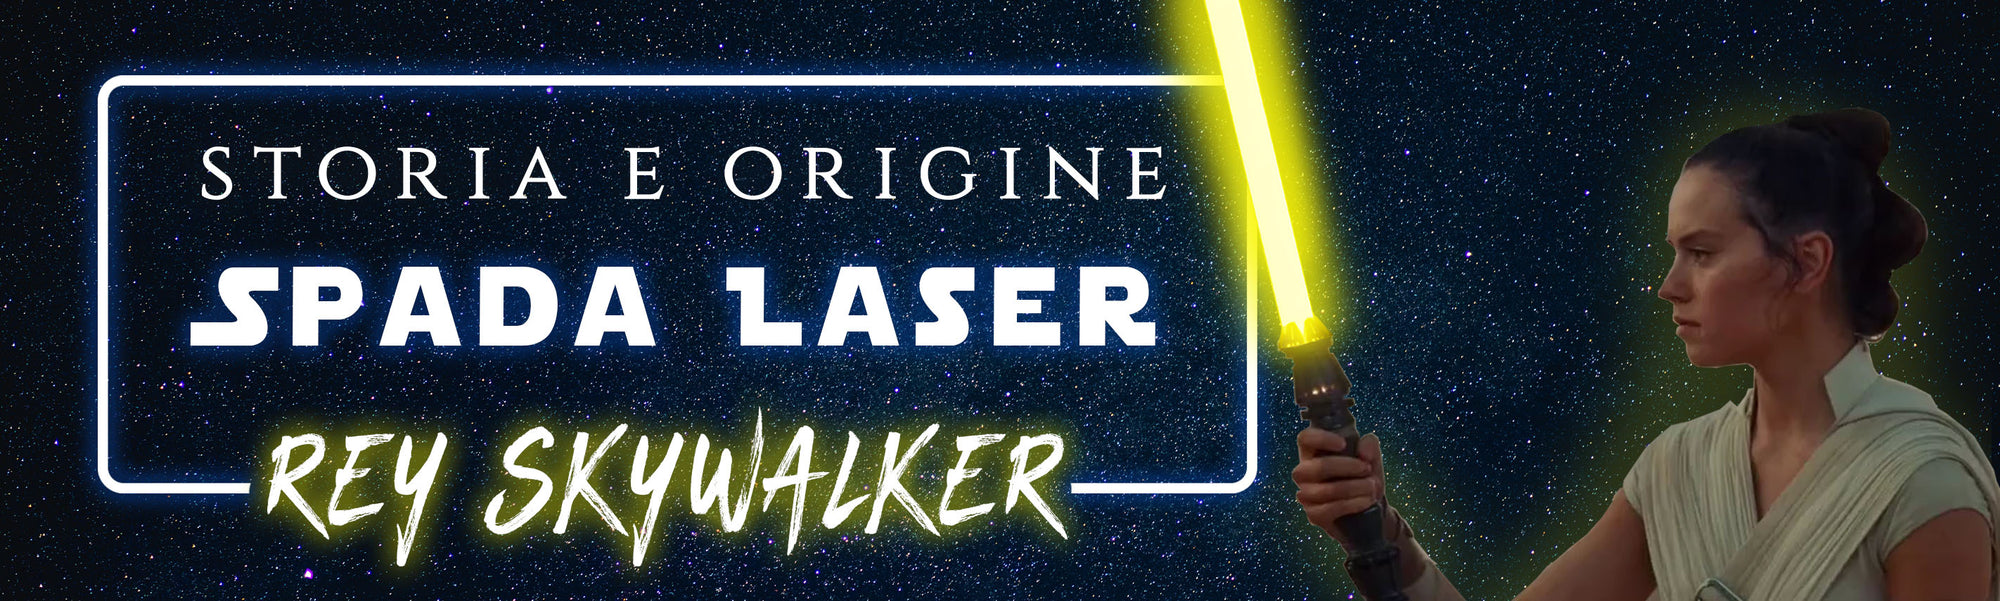 Spada Laser Gialla di Rey Skywalker